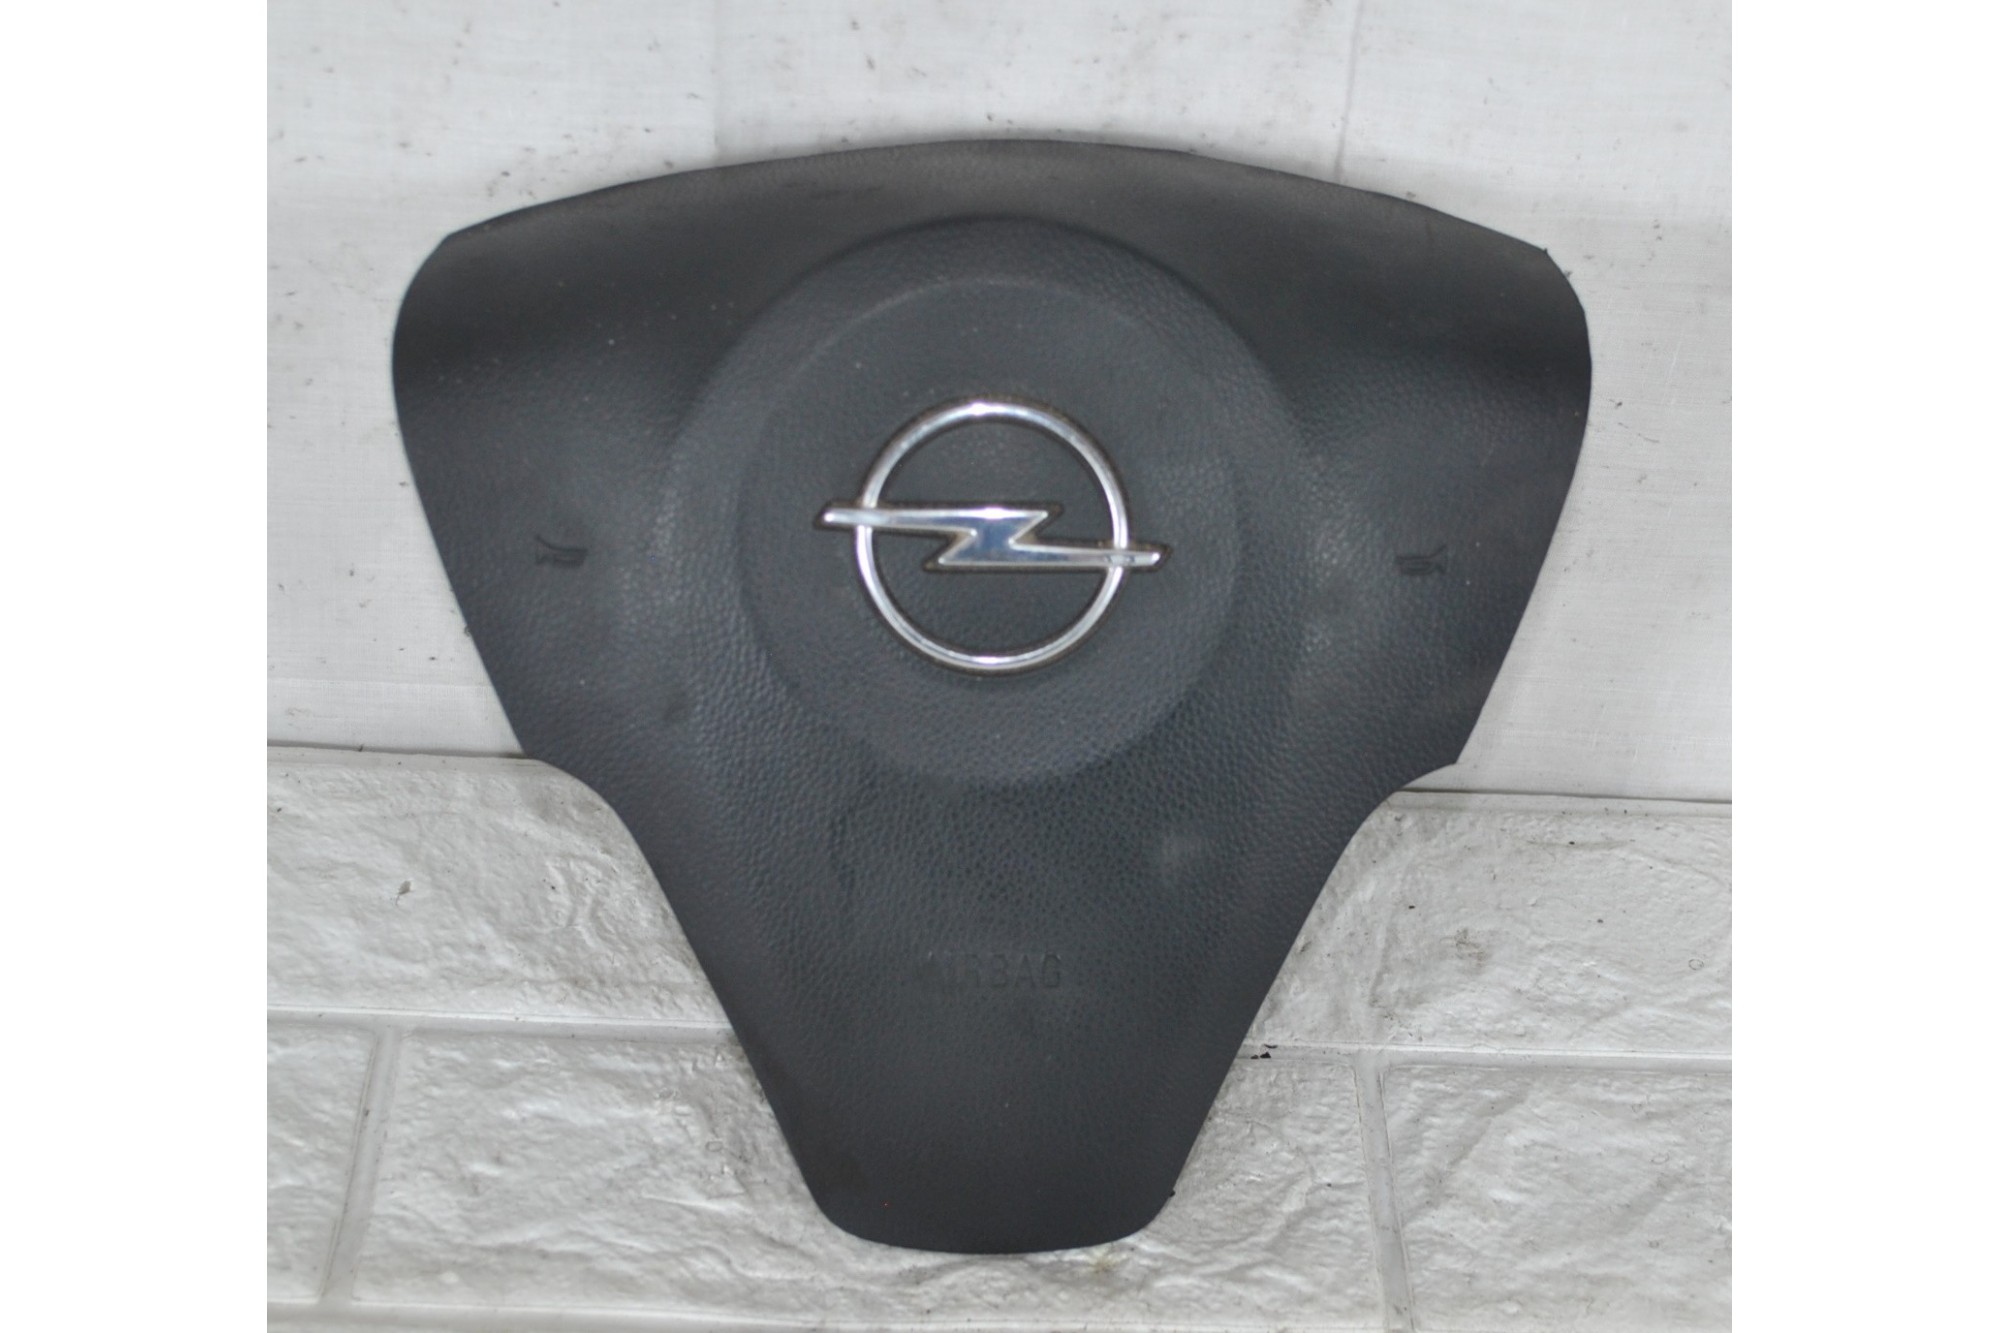 Airbag volante Opel Antara Dal 2006 al 2015 Cod. 96440827 8  1625063776625